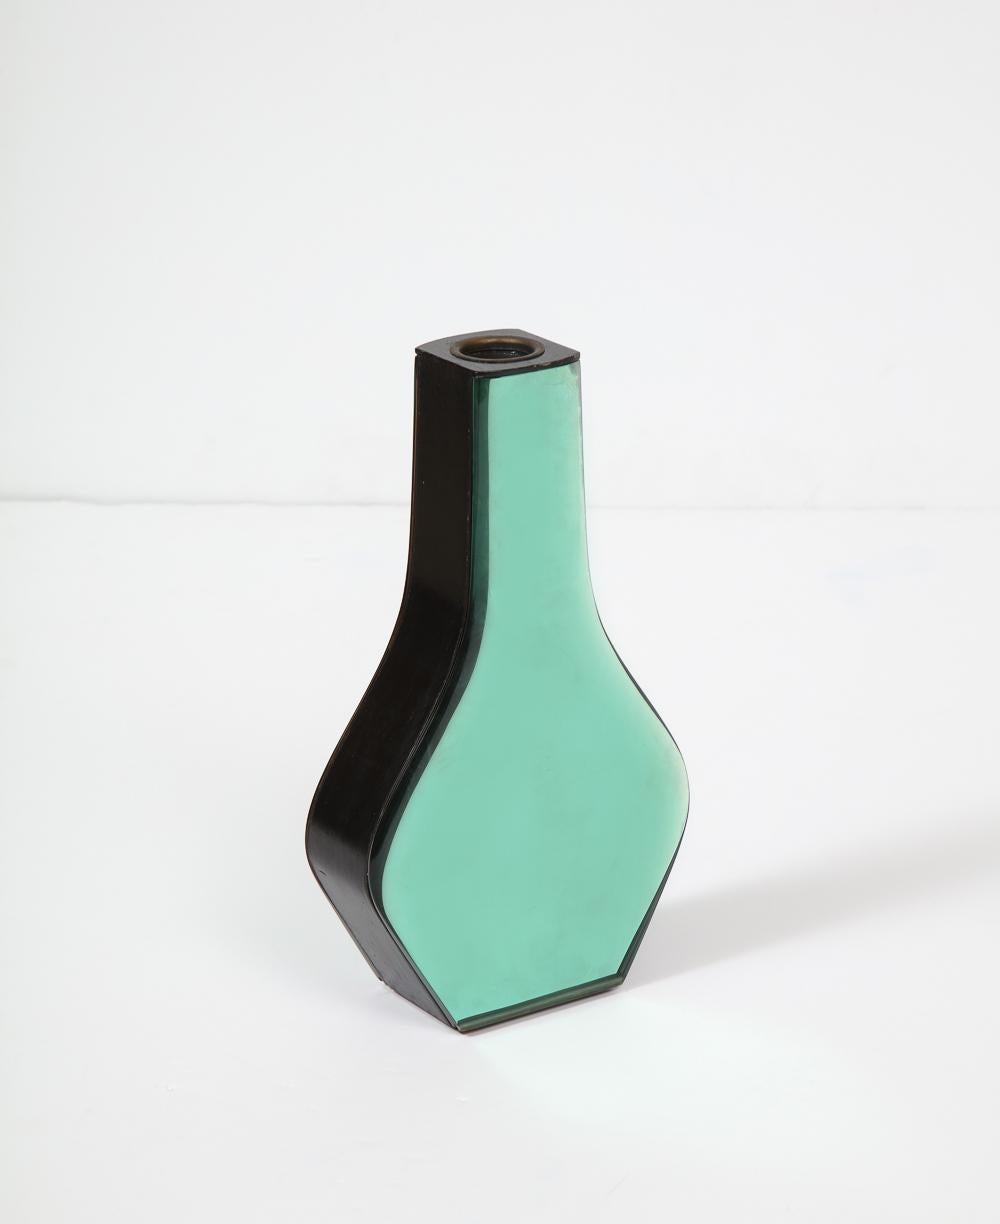 Brass Rare, Colored Glass Vases, Model No. 2122, by Max Ingrand for Fontana Arte